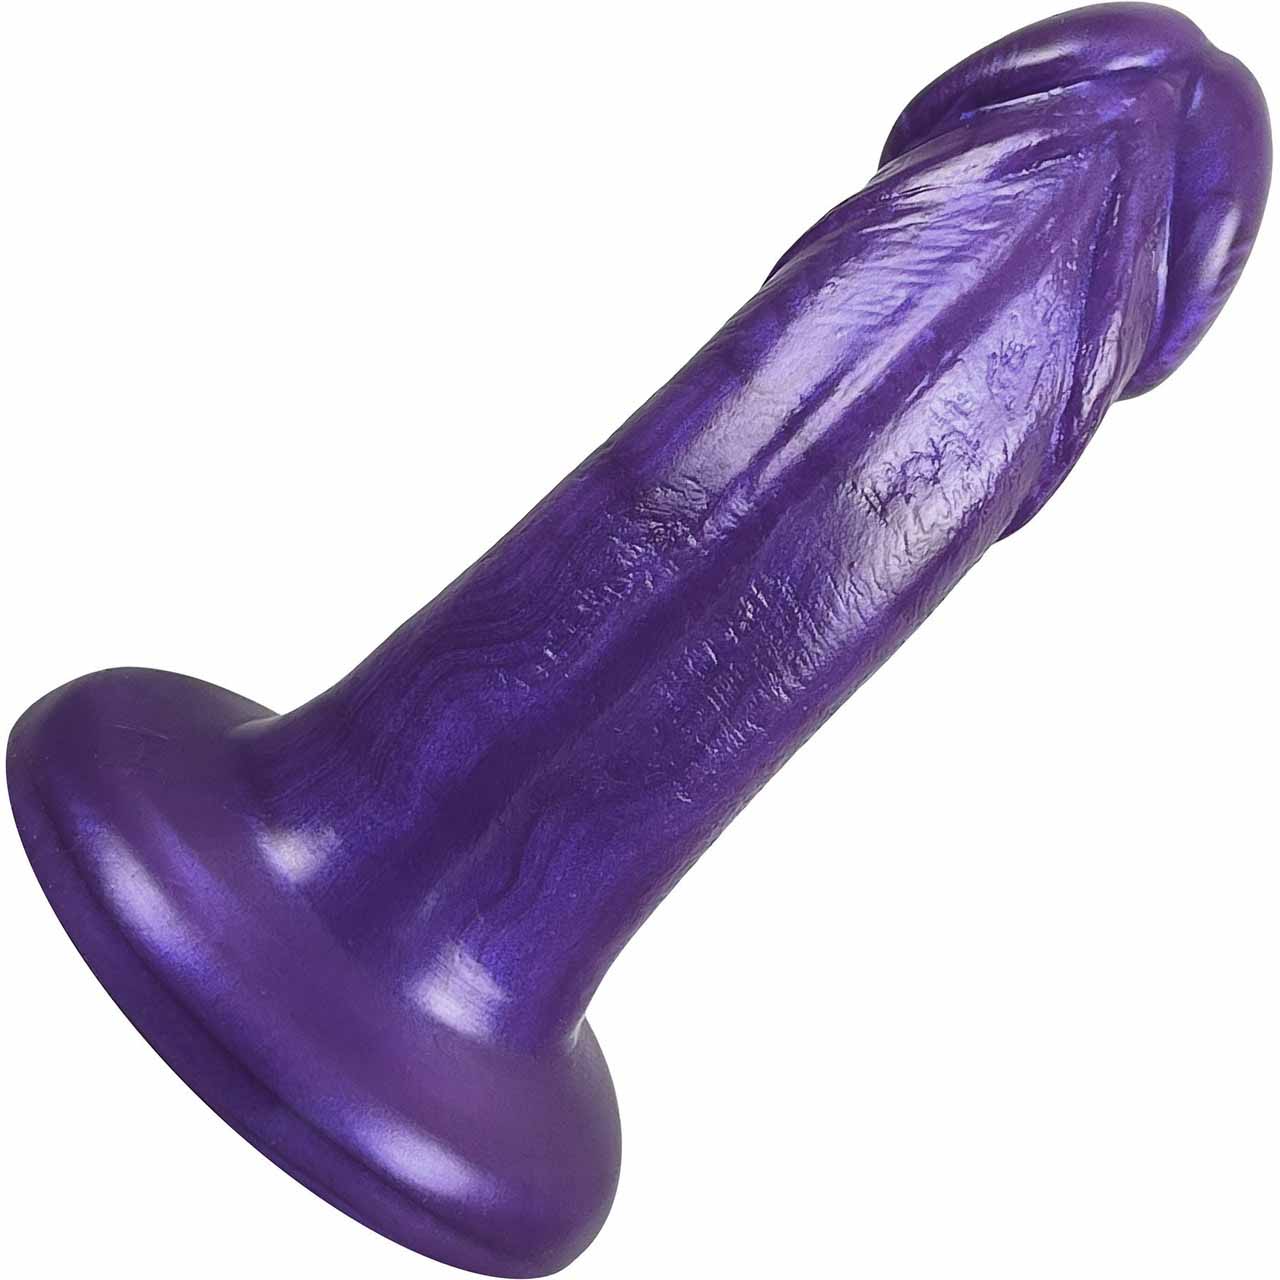 The back of the purple Medium Realistic Bent Dildo.